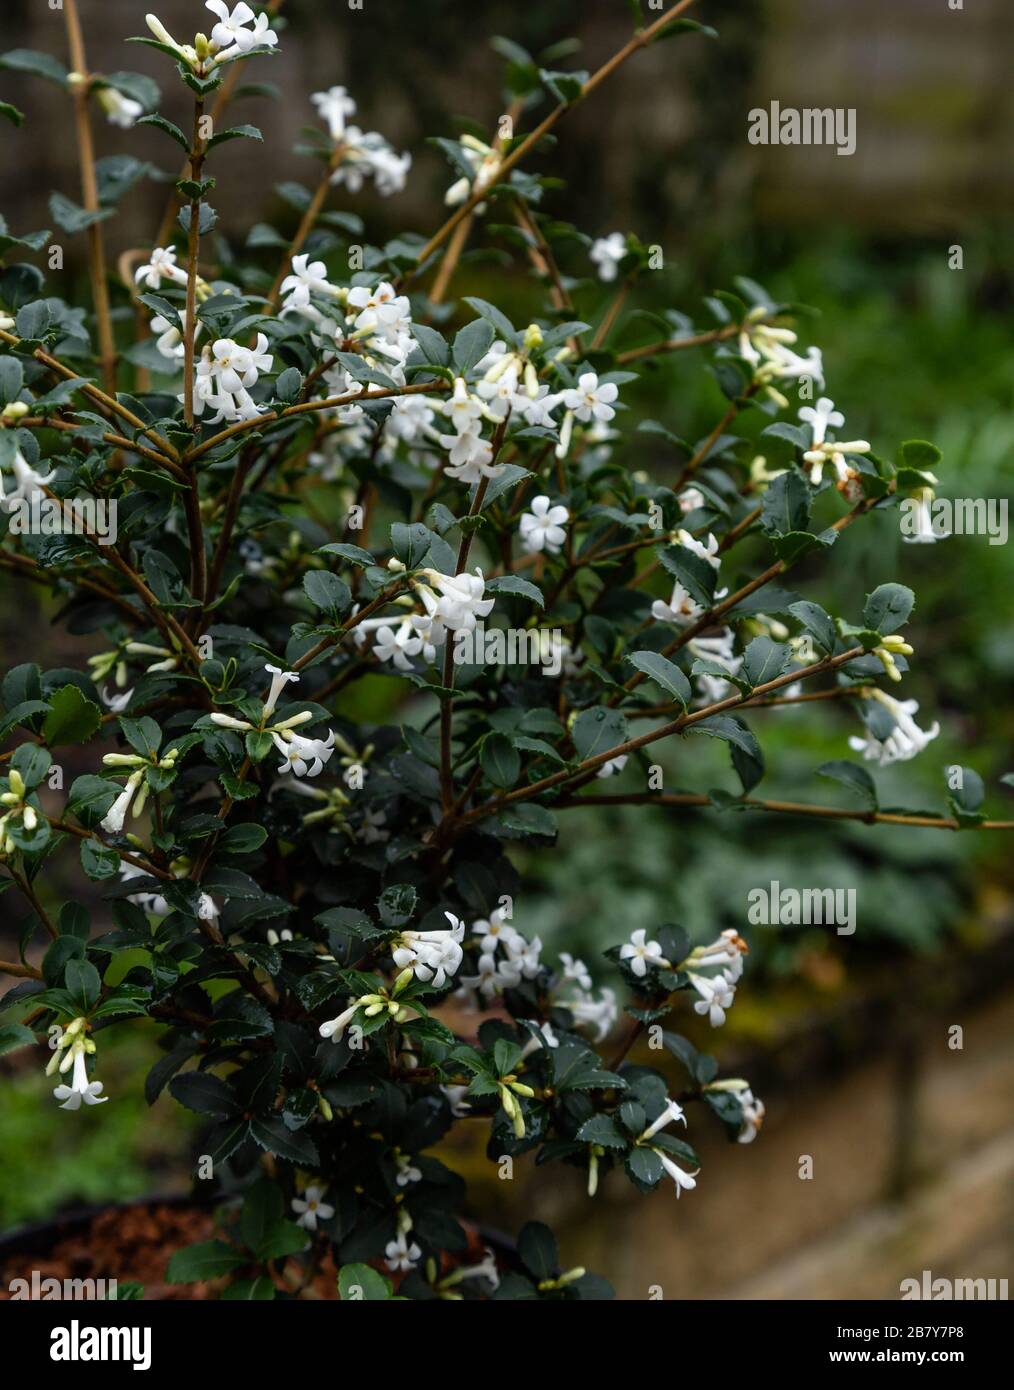 An Osmanthus Delavayi flowering shrub. Stock Photo